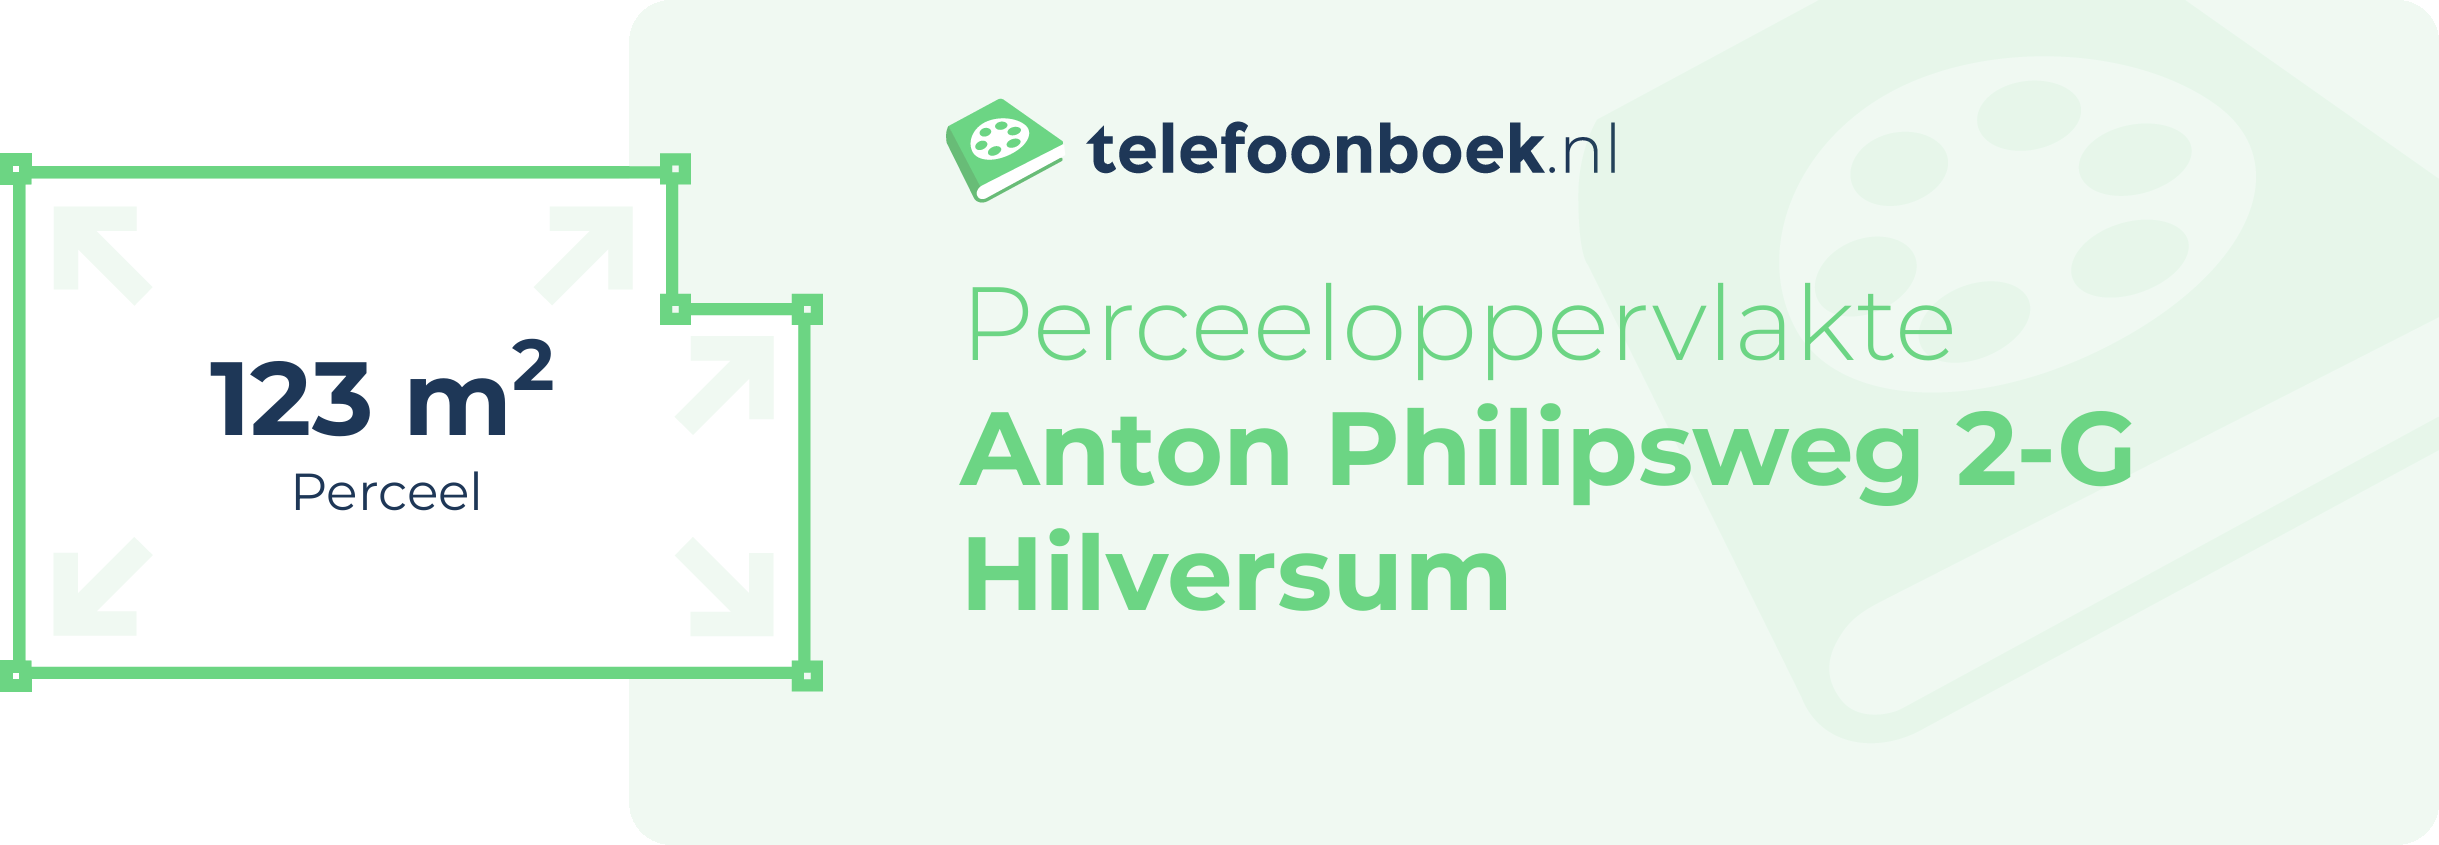 Perceeloppervlakte Anton Philipsweg 2-G Hilversum